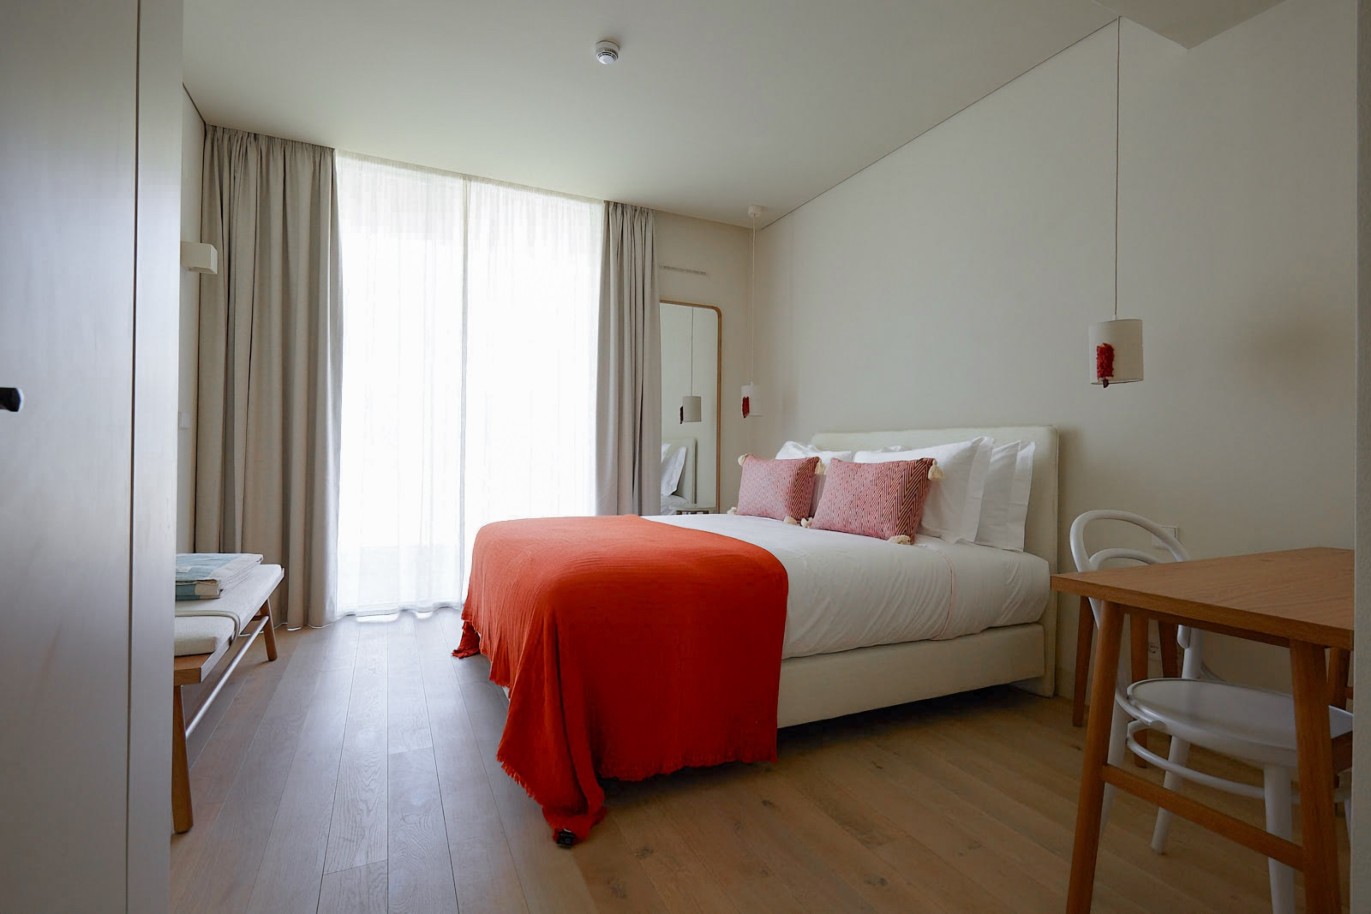 2 bedroom apartment in resort, for sale in Porches, Algarve_229147